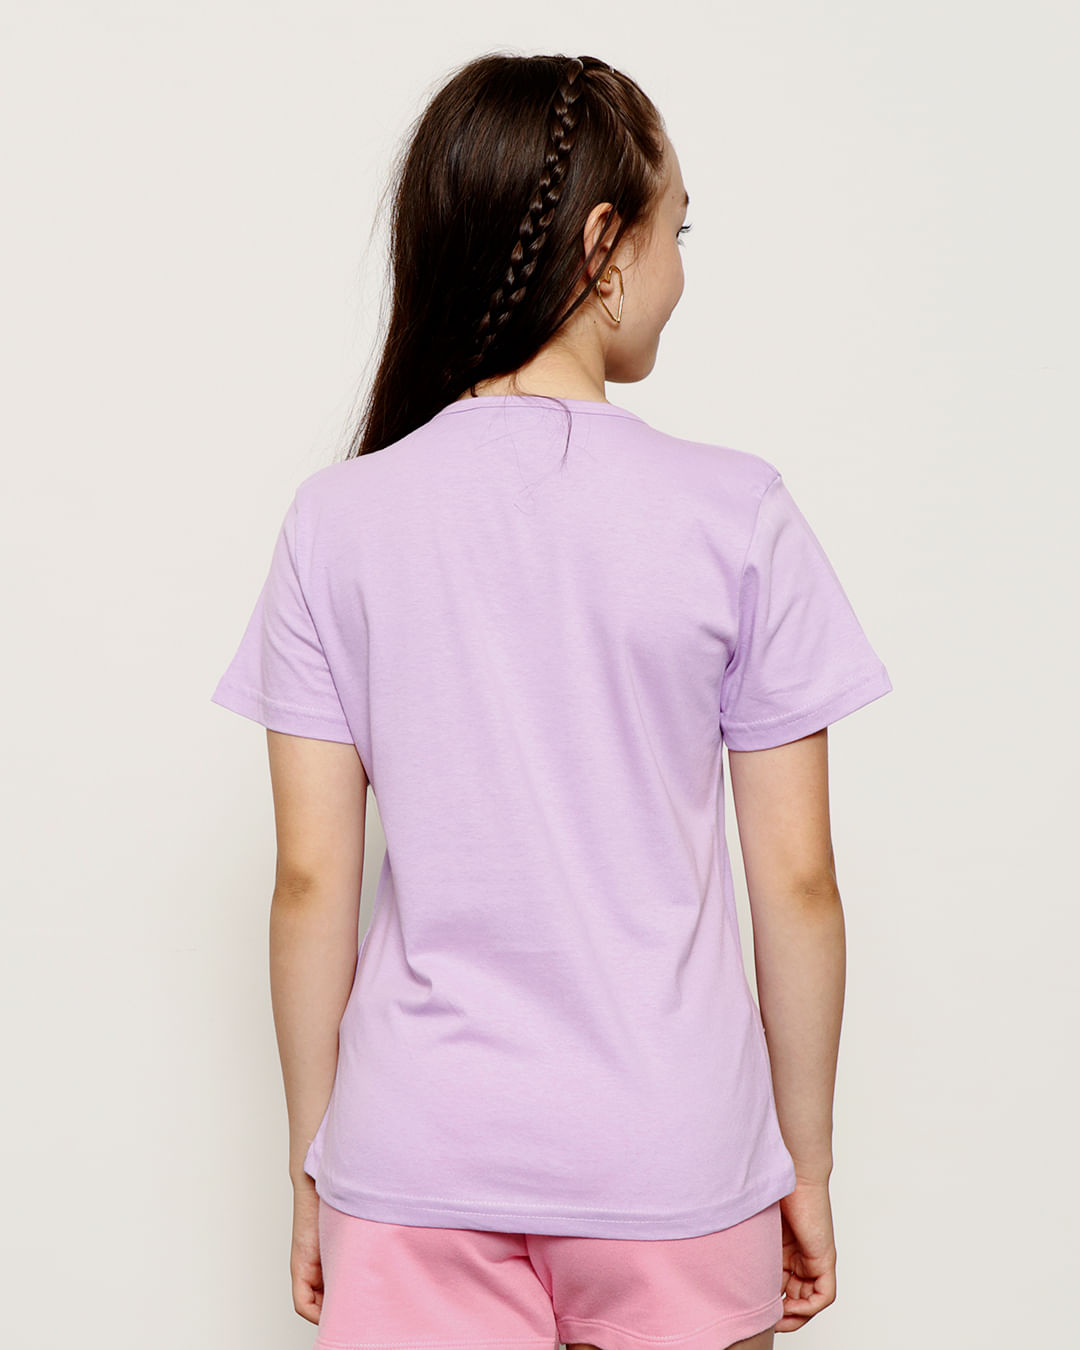 Camiseta-Juvenil-Menina-Warner-Rick-e-Morty-com-Estampa-Frente-Lilas